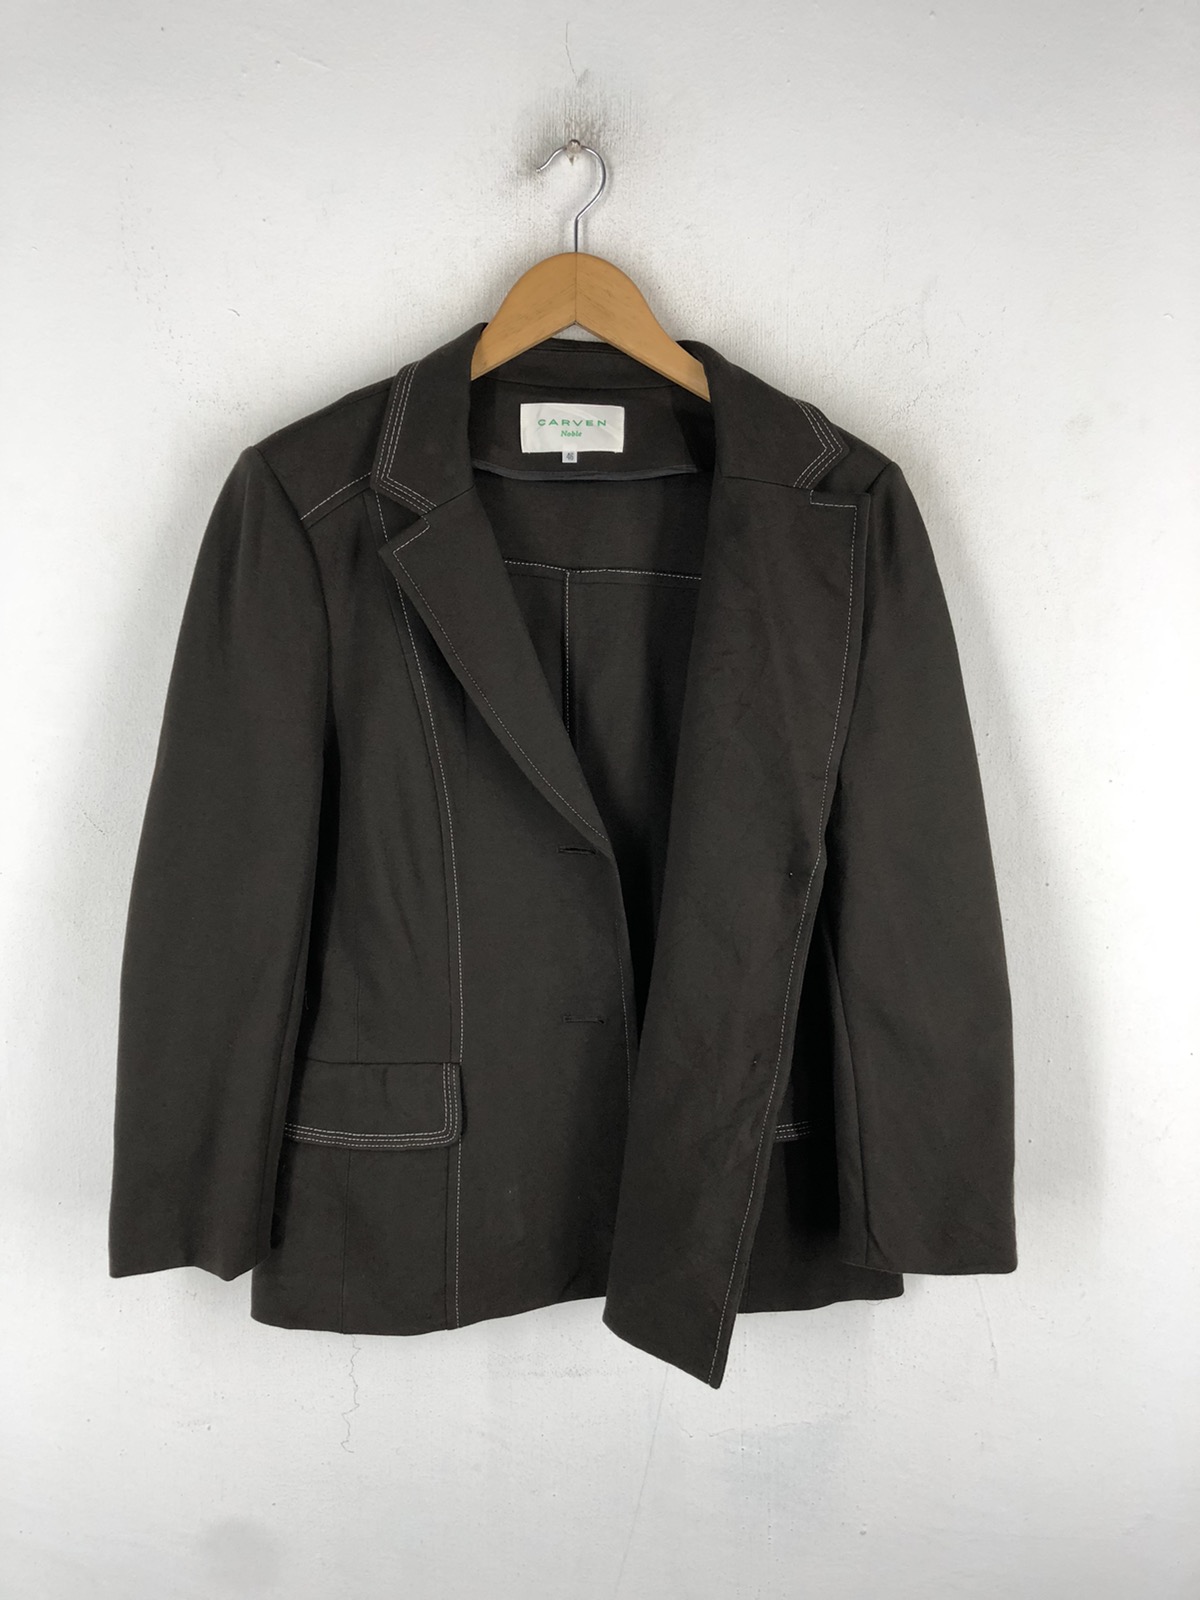 Carven noble jacket - 8